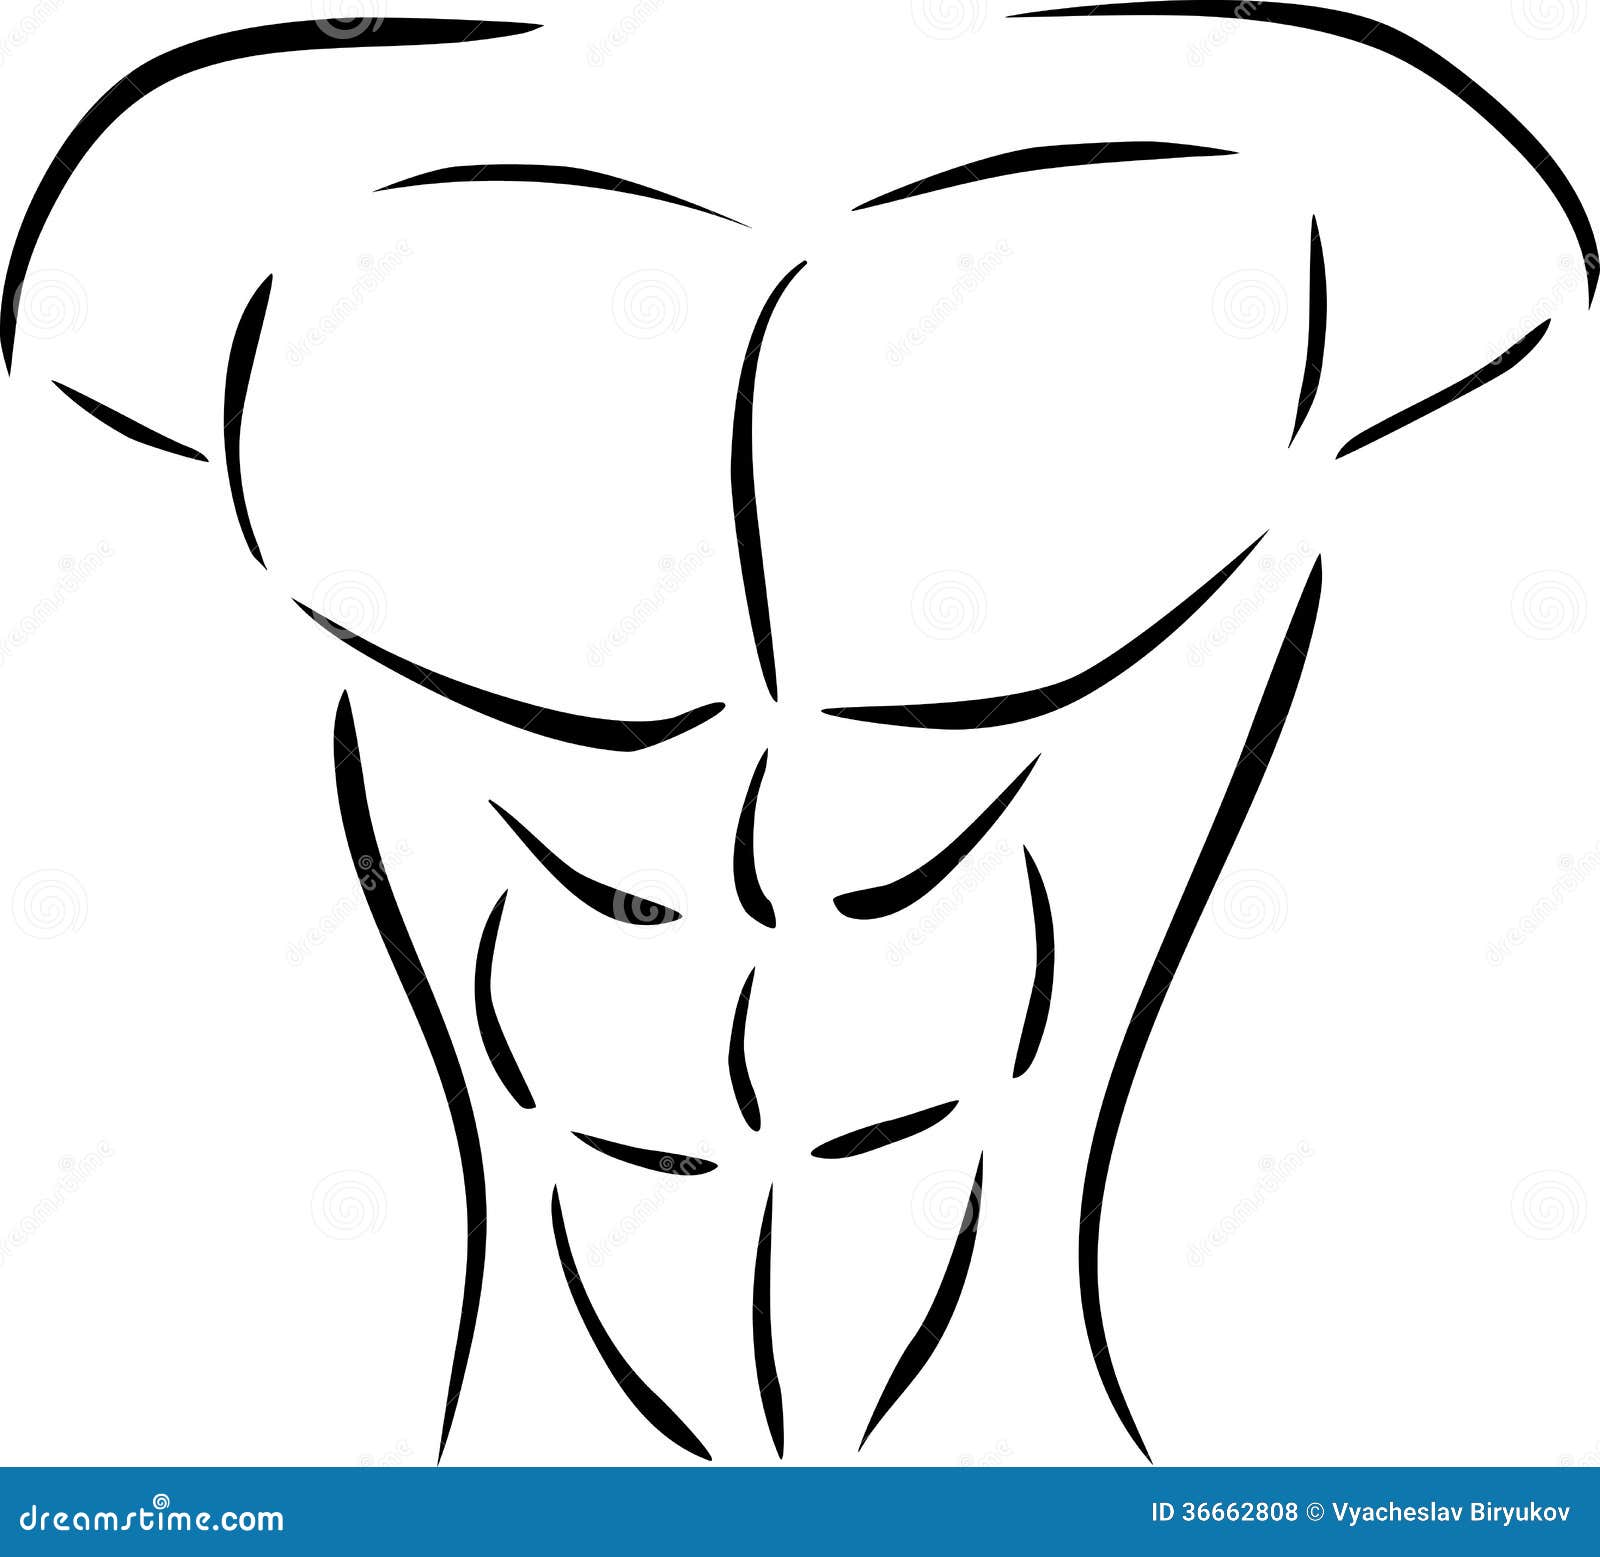 Muscular body stock vector. Image of vector, statue, body - 36662808